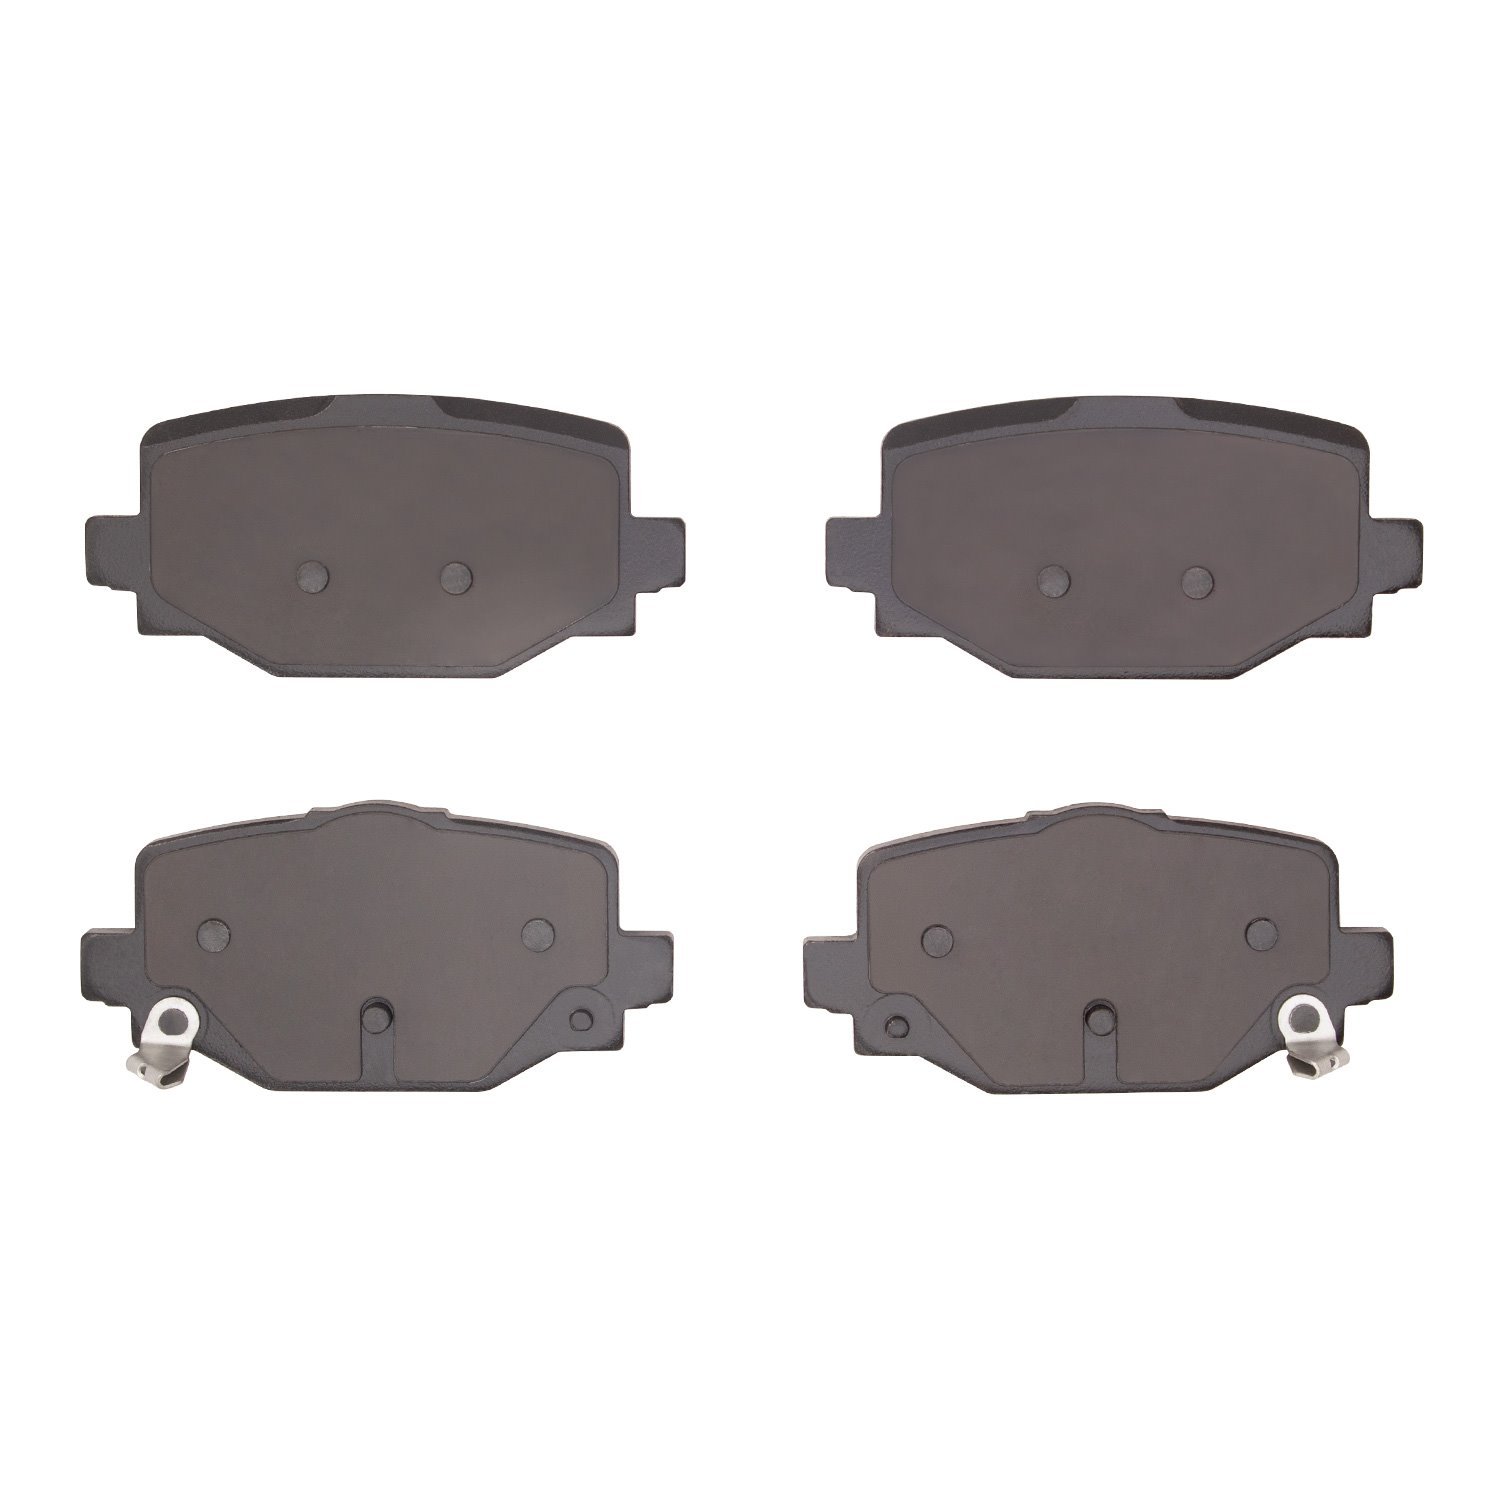 1551-2191-00 5000 Advanced Ceramic Brake Pads, Fits Select Infiniti/Nissan, Position: Rear